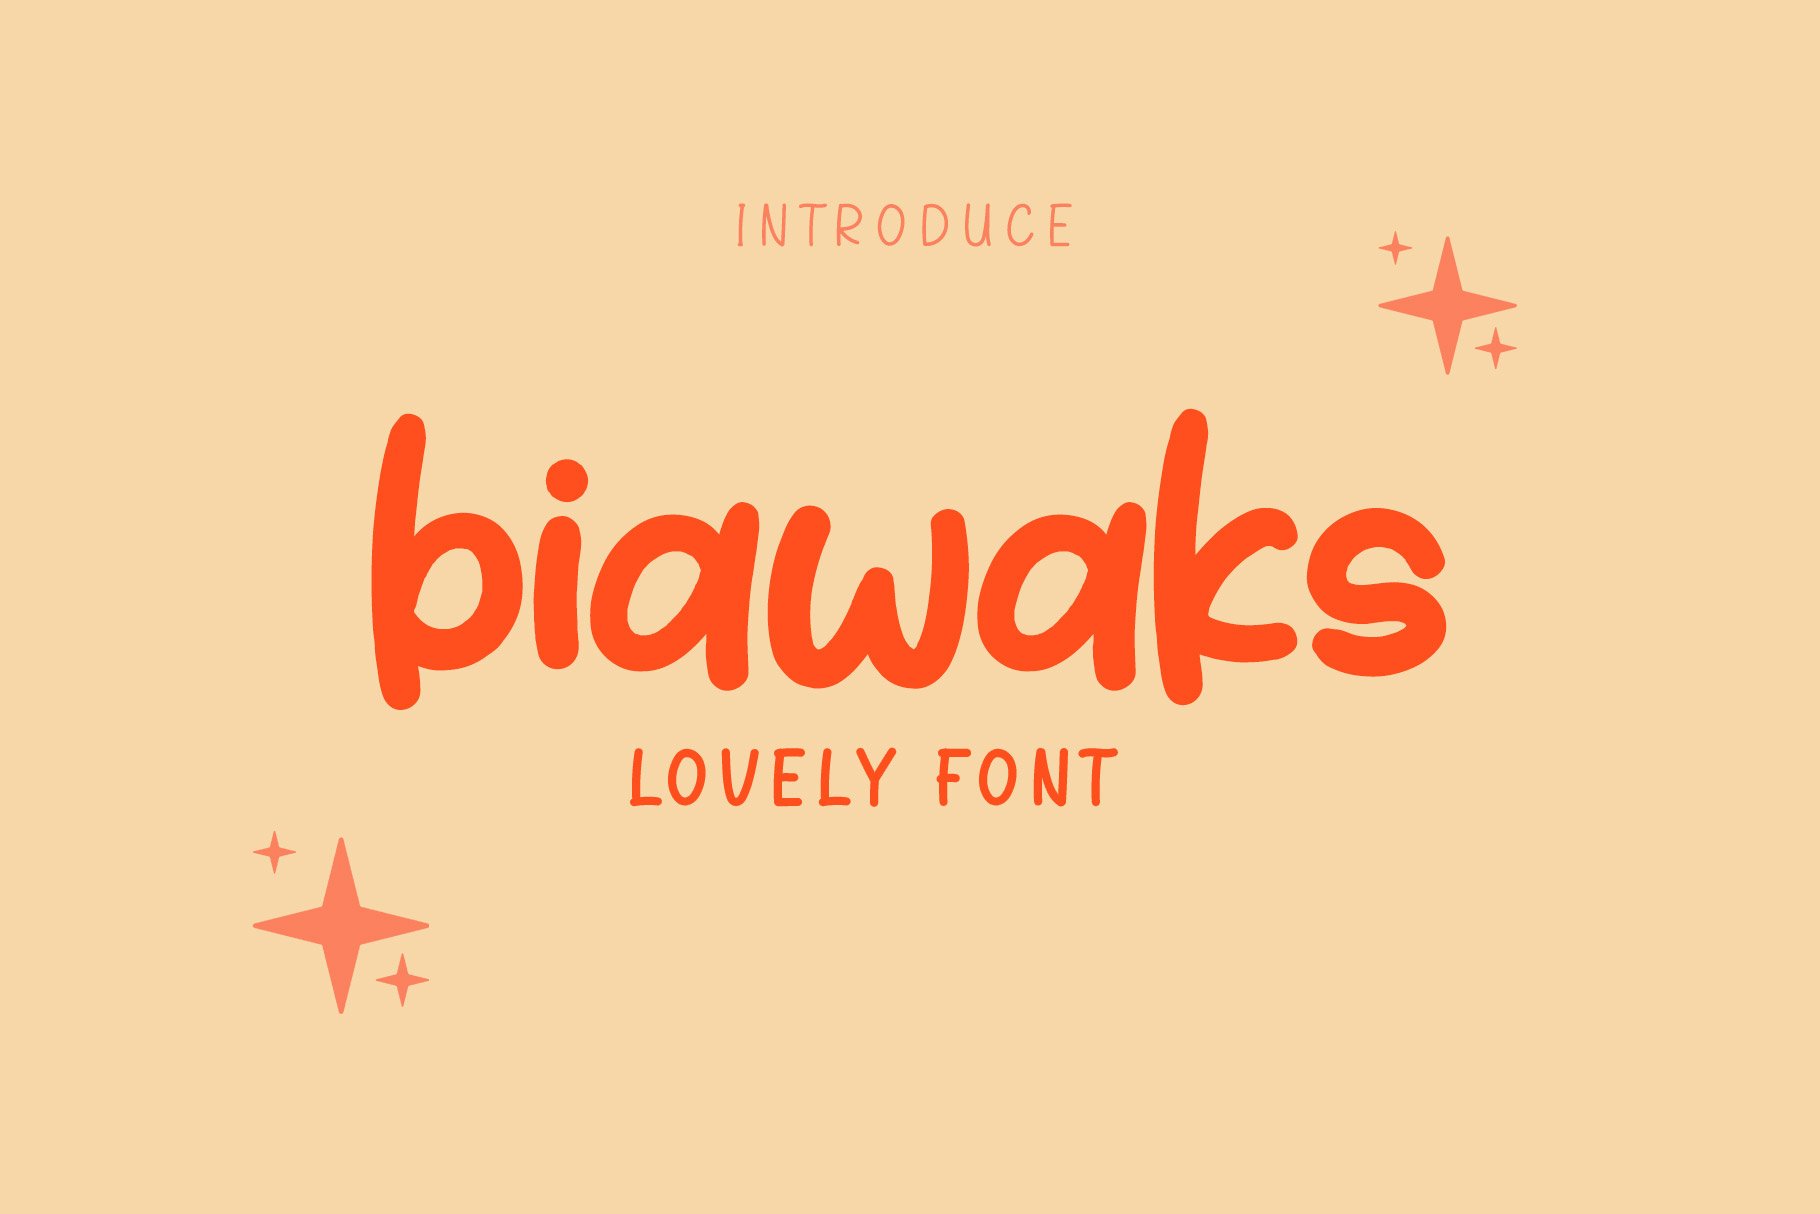 Biawaks